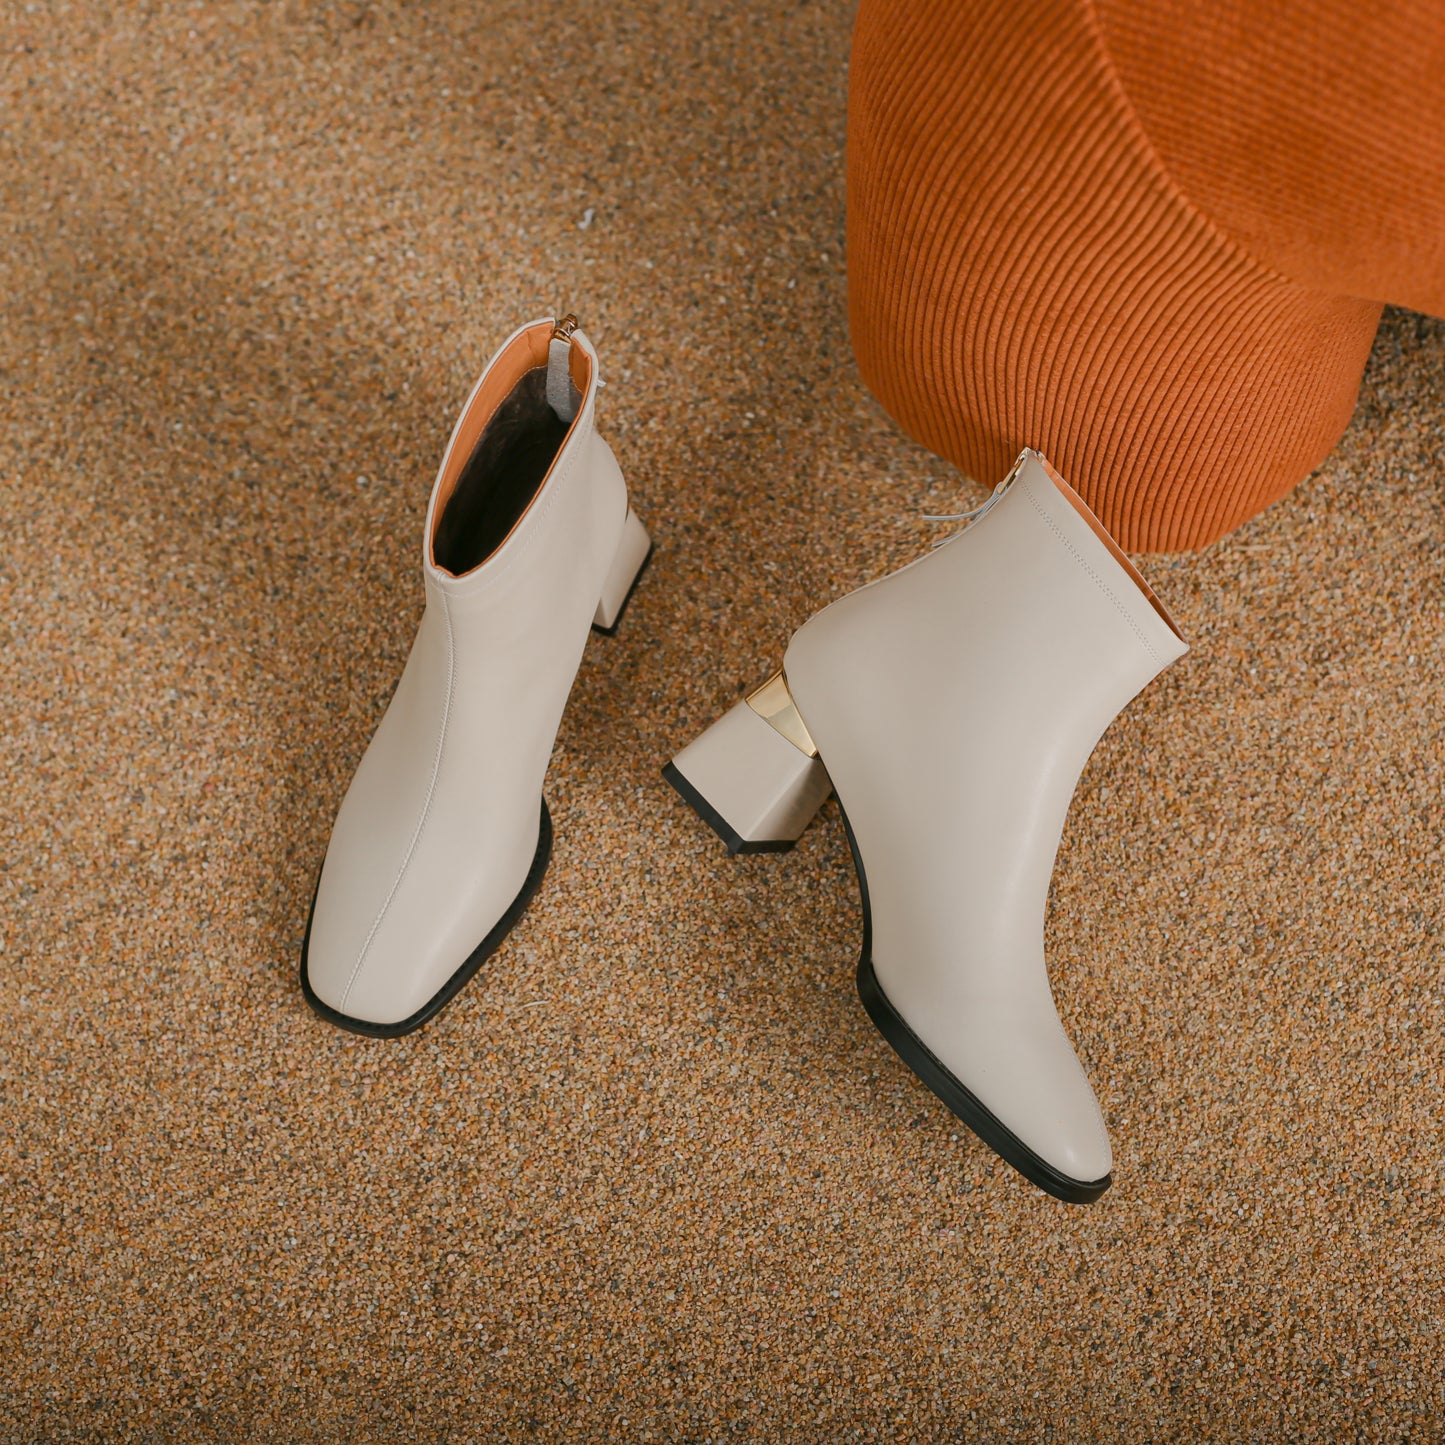 TinaCus Women's Genuine Leather Handmade Mid Block Heel Back Zip Up Ankle Boots